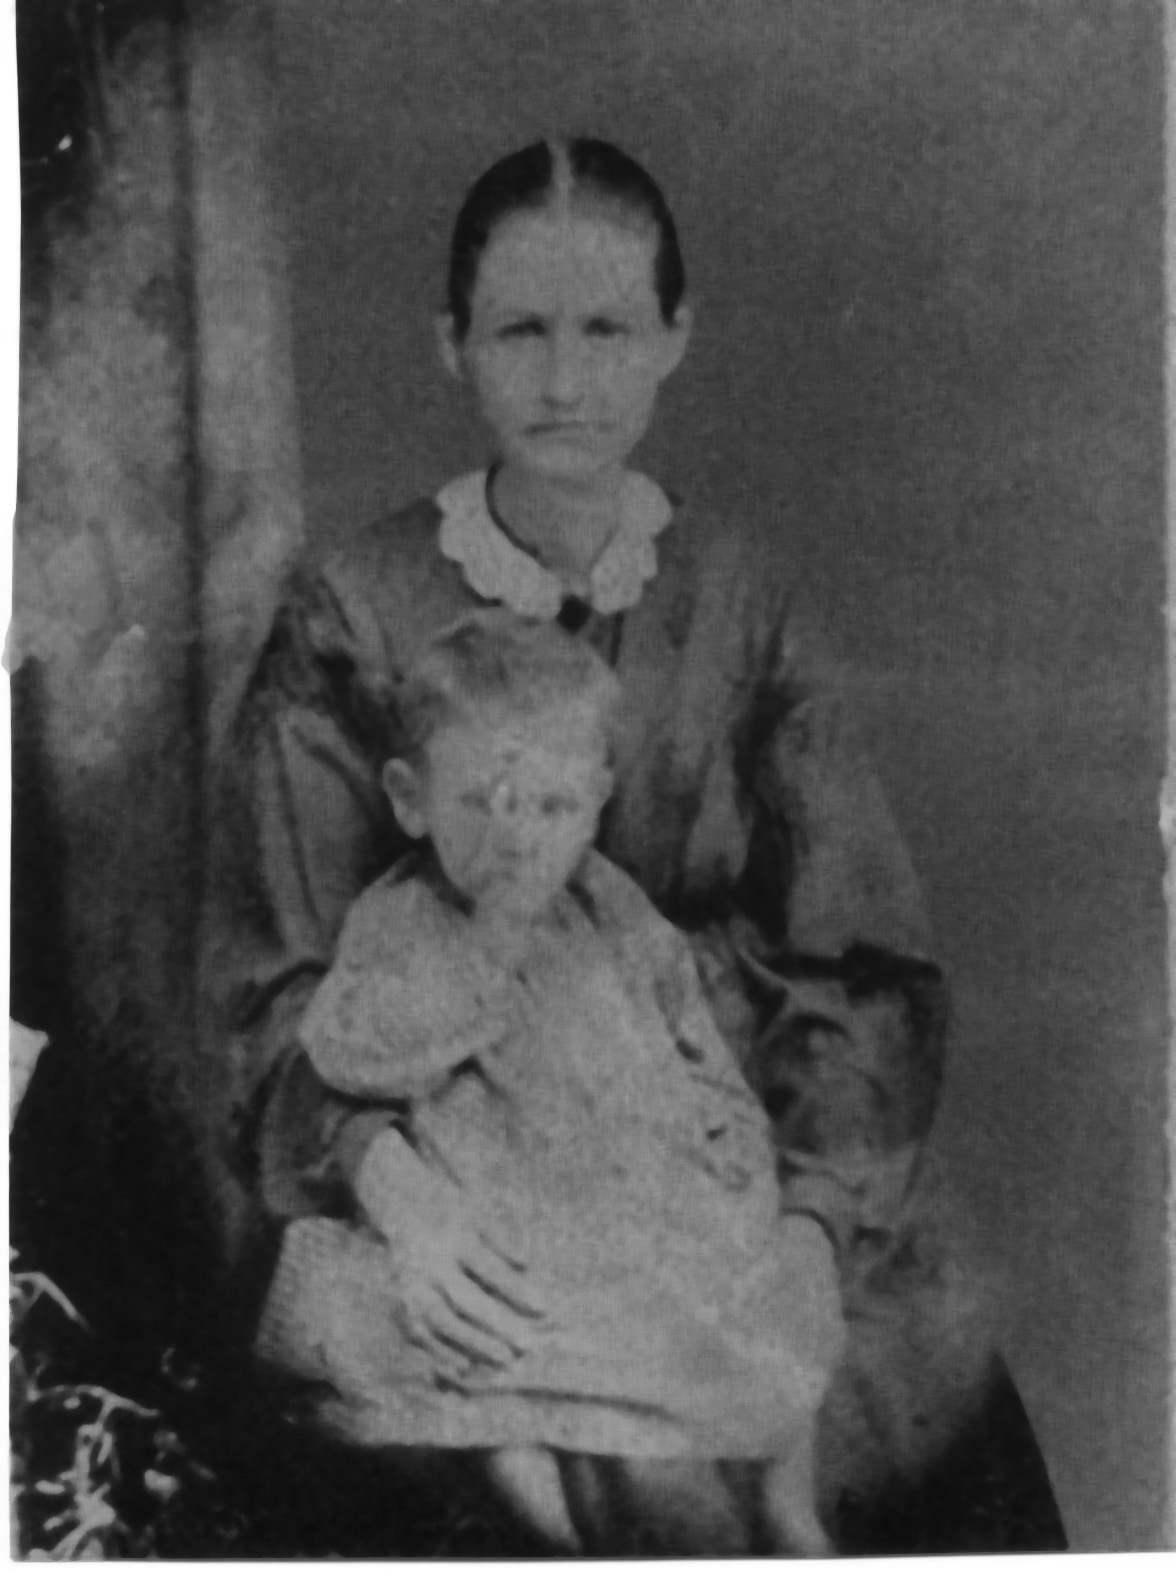 Julia Ginder Arledge & child